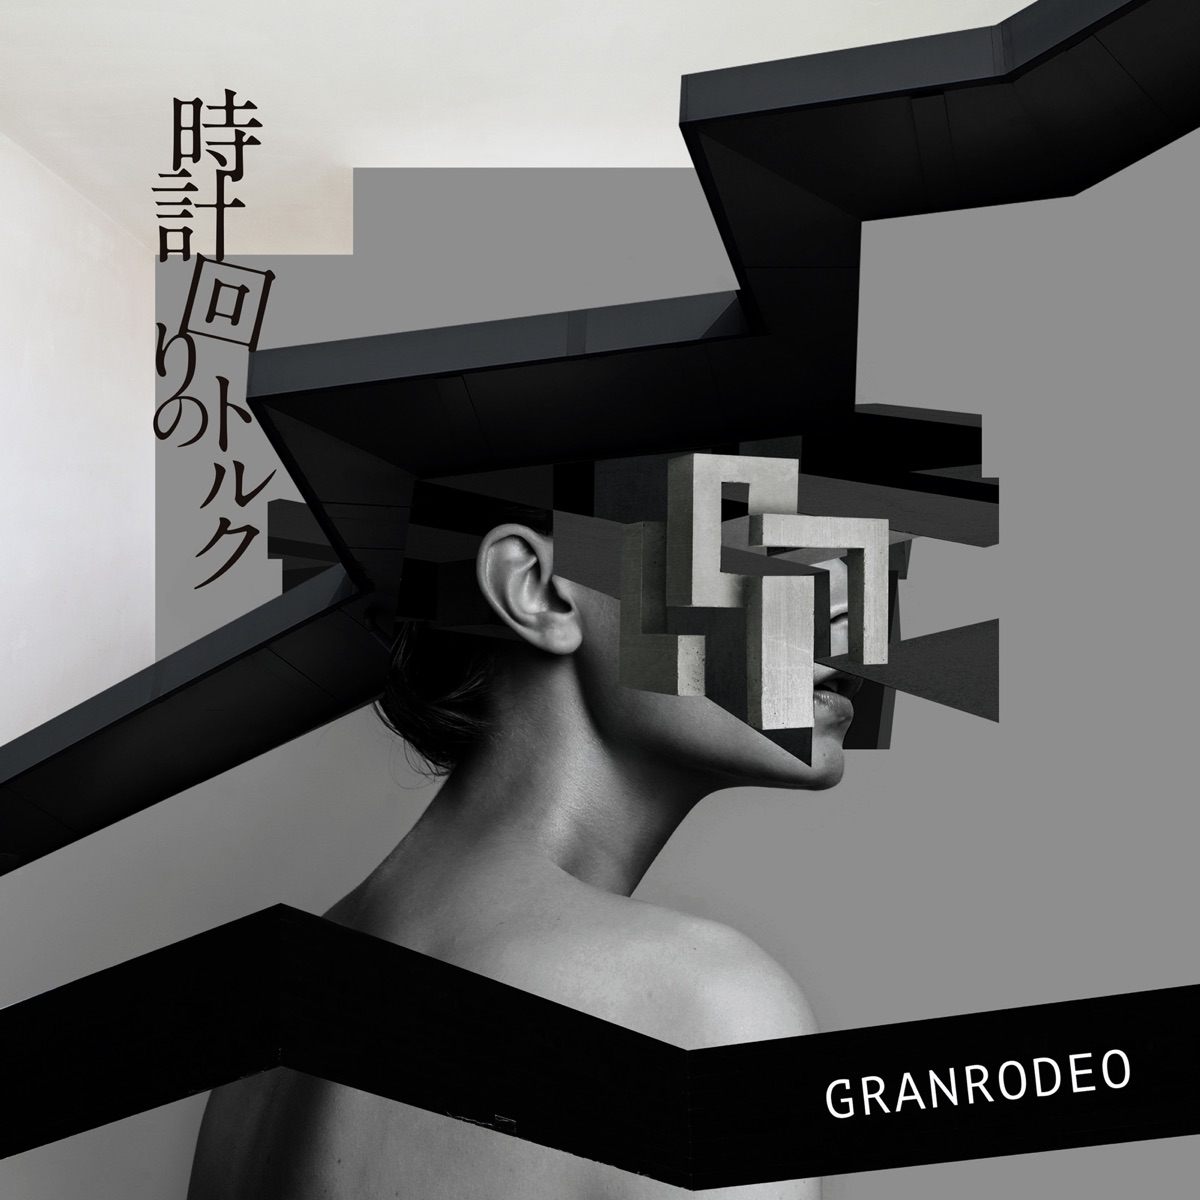 Cover art for『GRANRODEO - Tokei Mawari no Torque』from the release『Tokei Mawari no Torque』